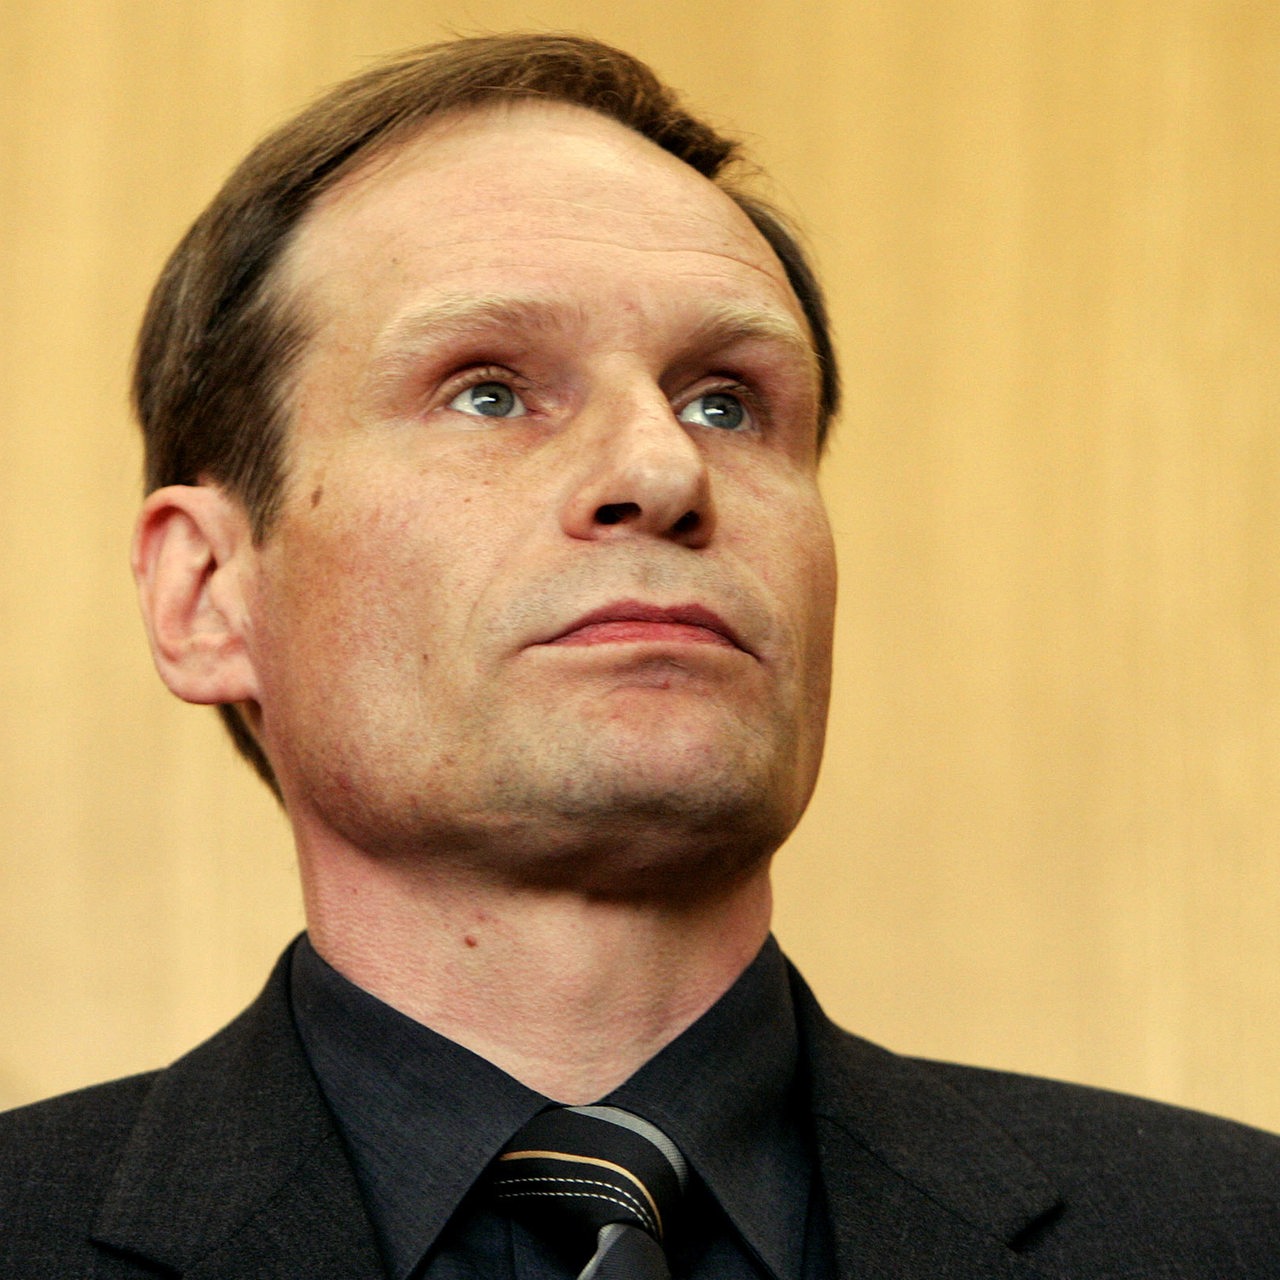 Armin Meiwes im Mai 2006 im Gerichtssaal (Archivbild)